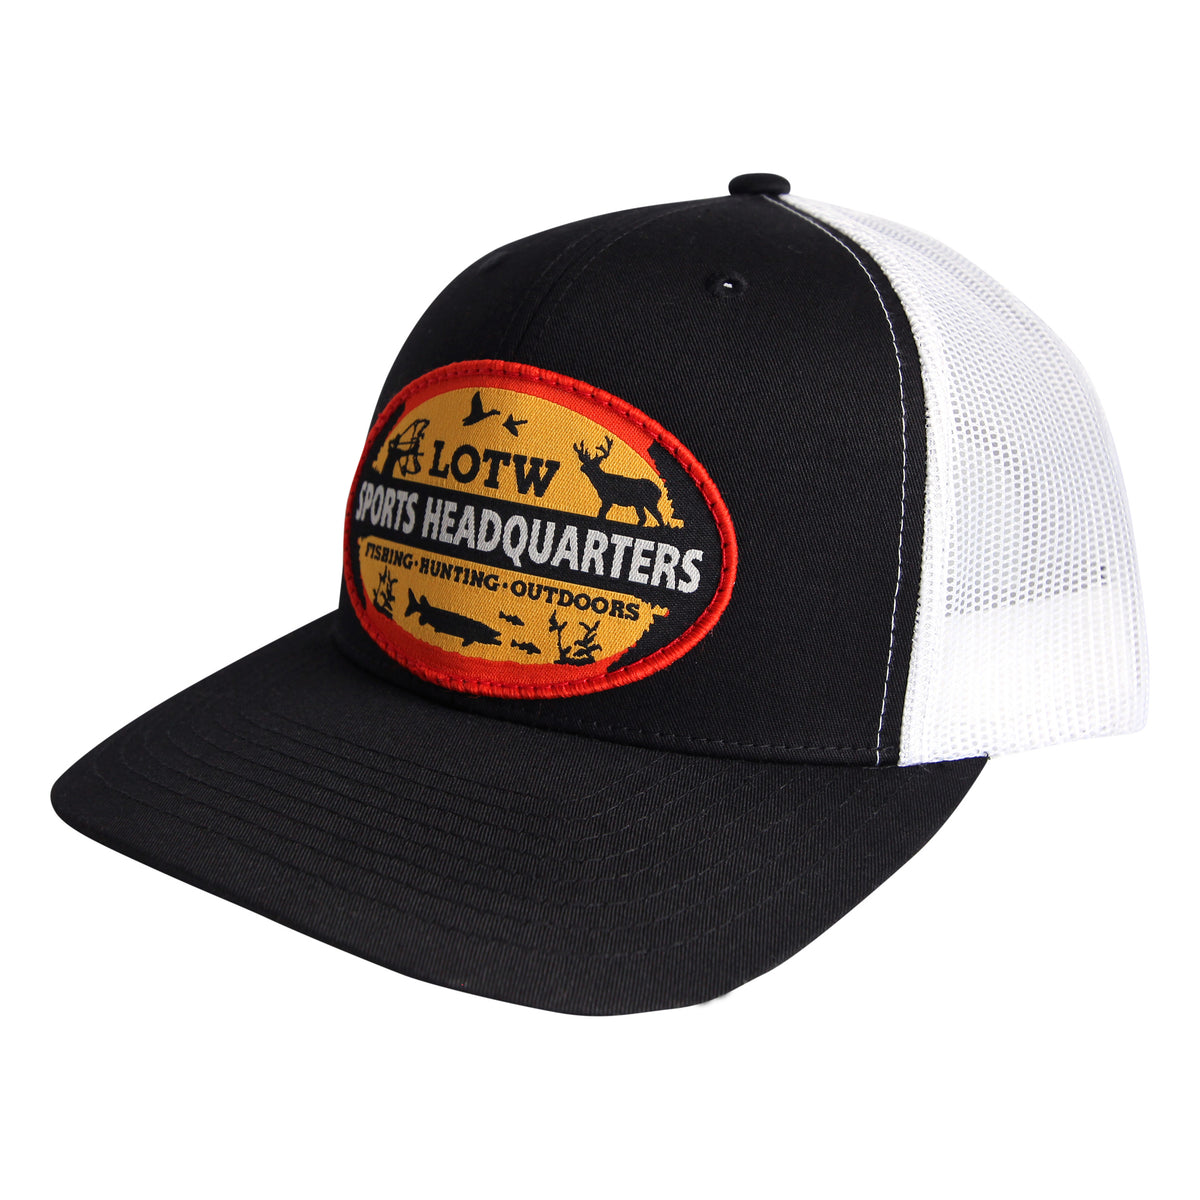 LOTW Sports Headquarters Retro Snapback Trucker Hats - Black/White